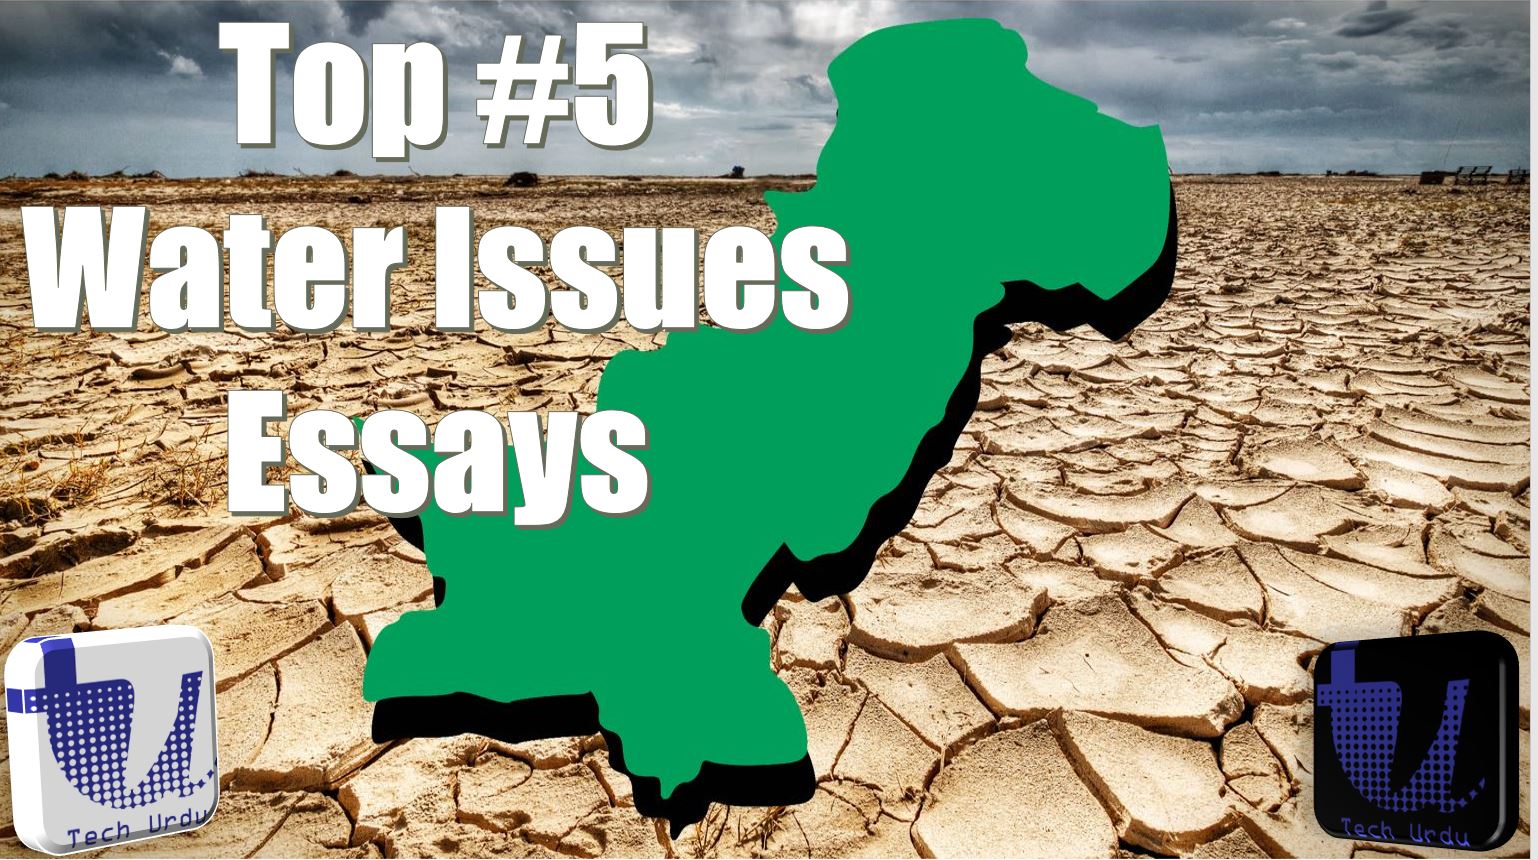 water crisis in pakistan css essay pdf